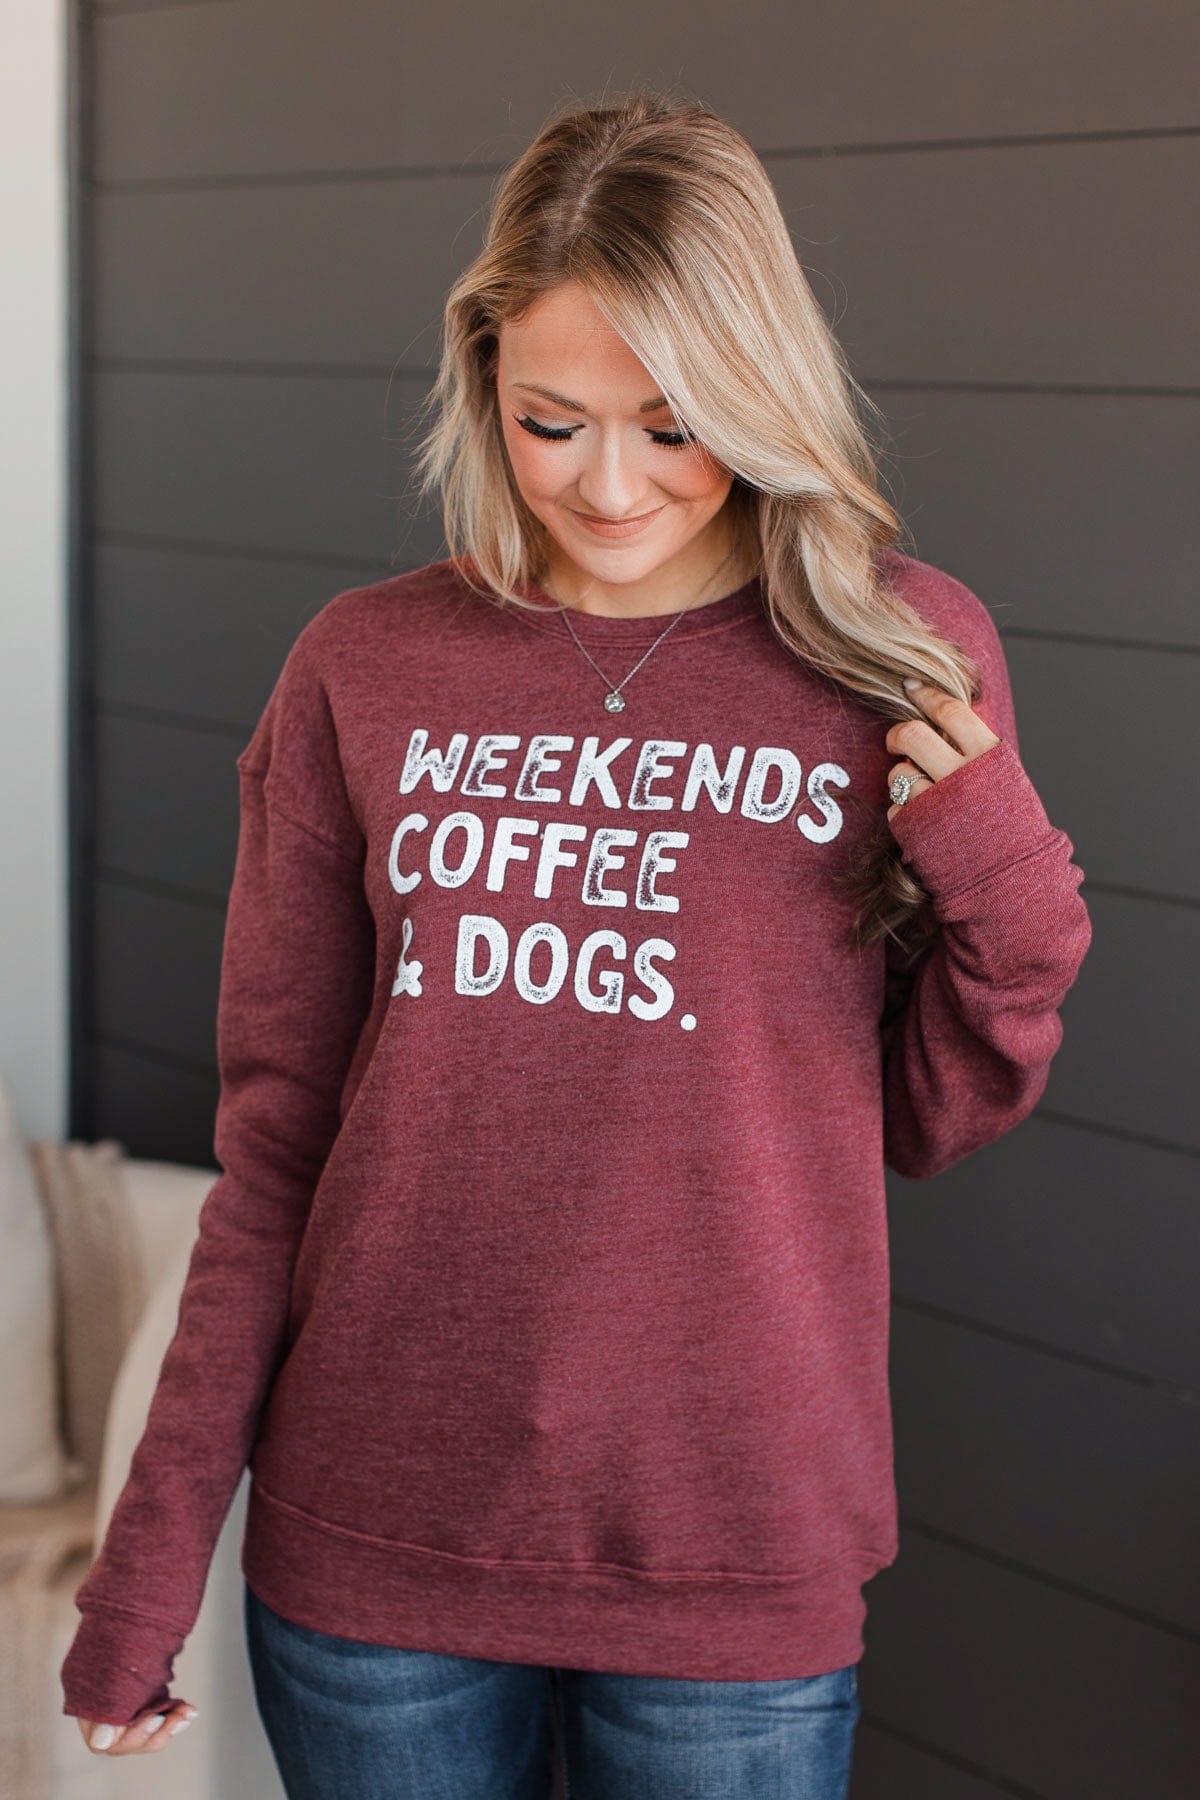 "Weekends, Coffee, & Dogs" Crew Neck- Maroon